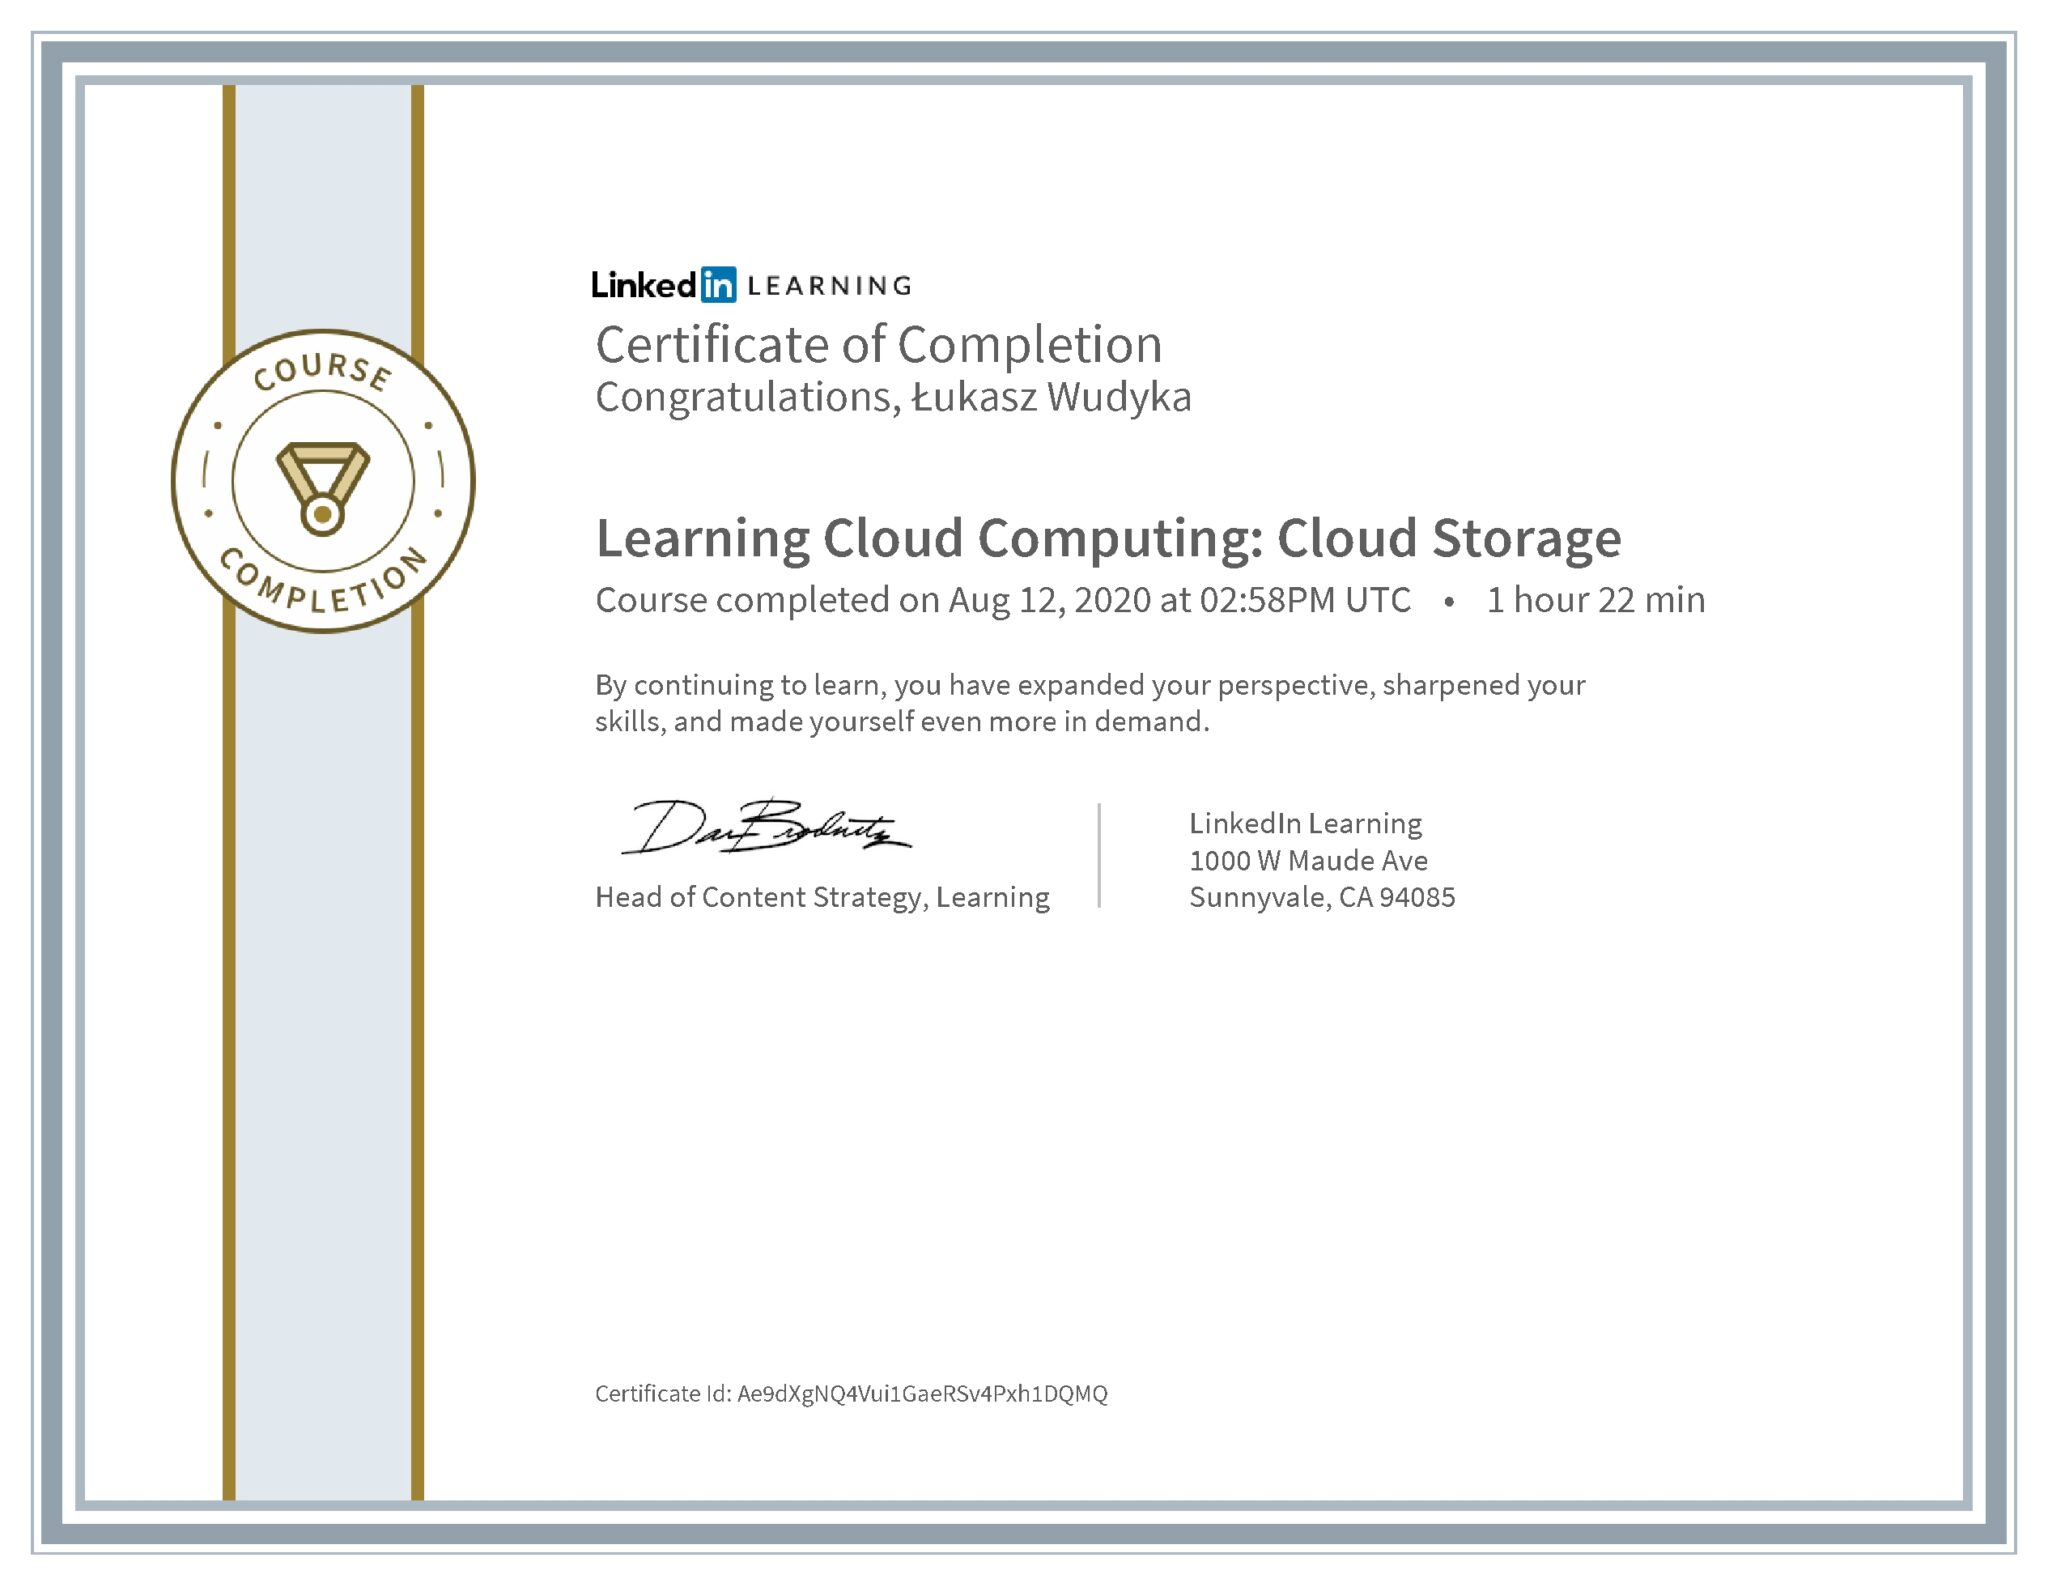 Łukasz Wudyka certyfikat LinkedIn Learning Cloud Computing: Cloud Storage